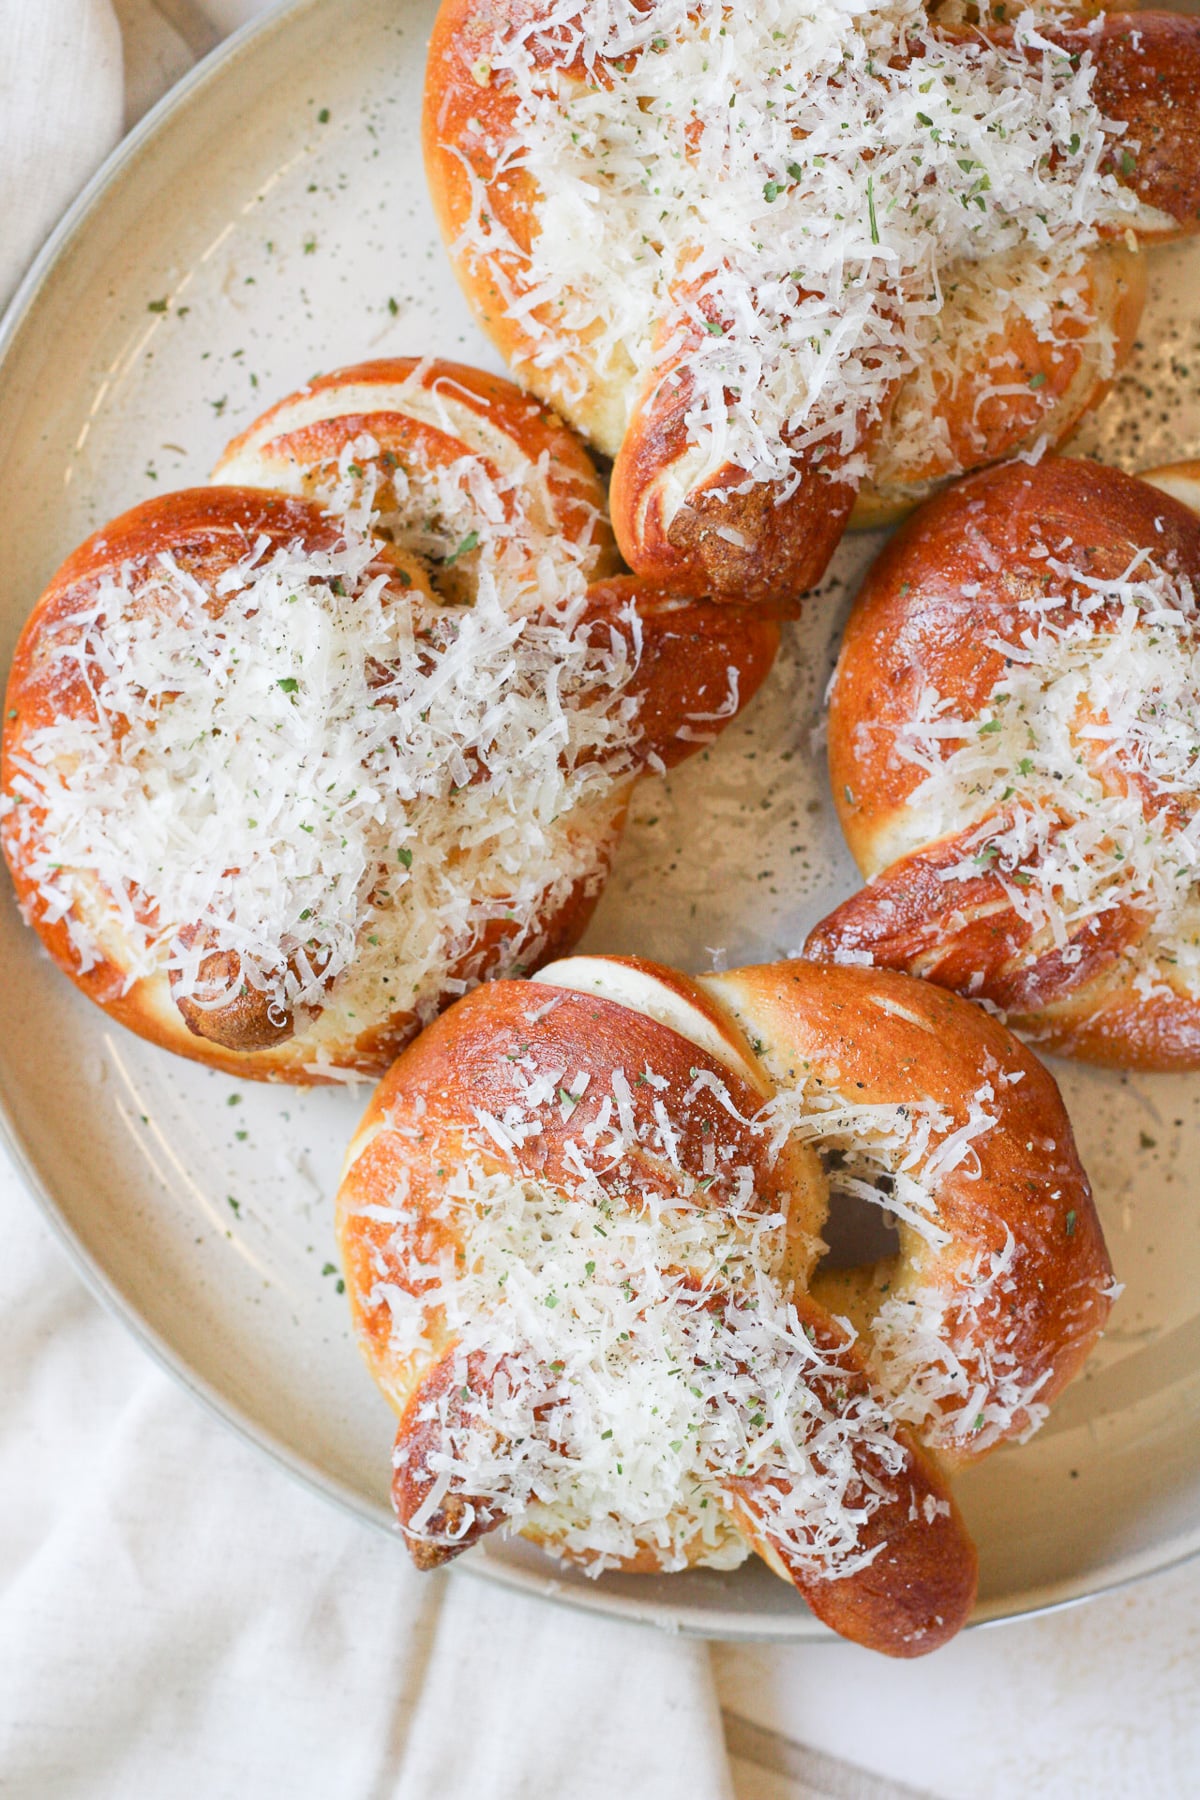 Garlic parmesan soft pretzels on a plate.